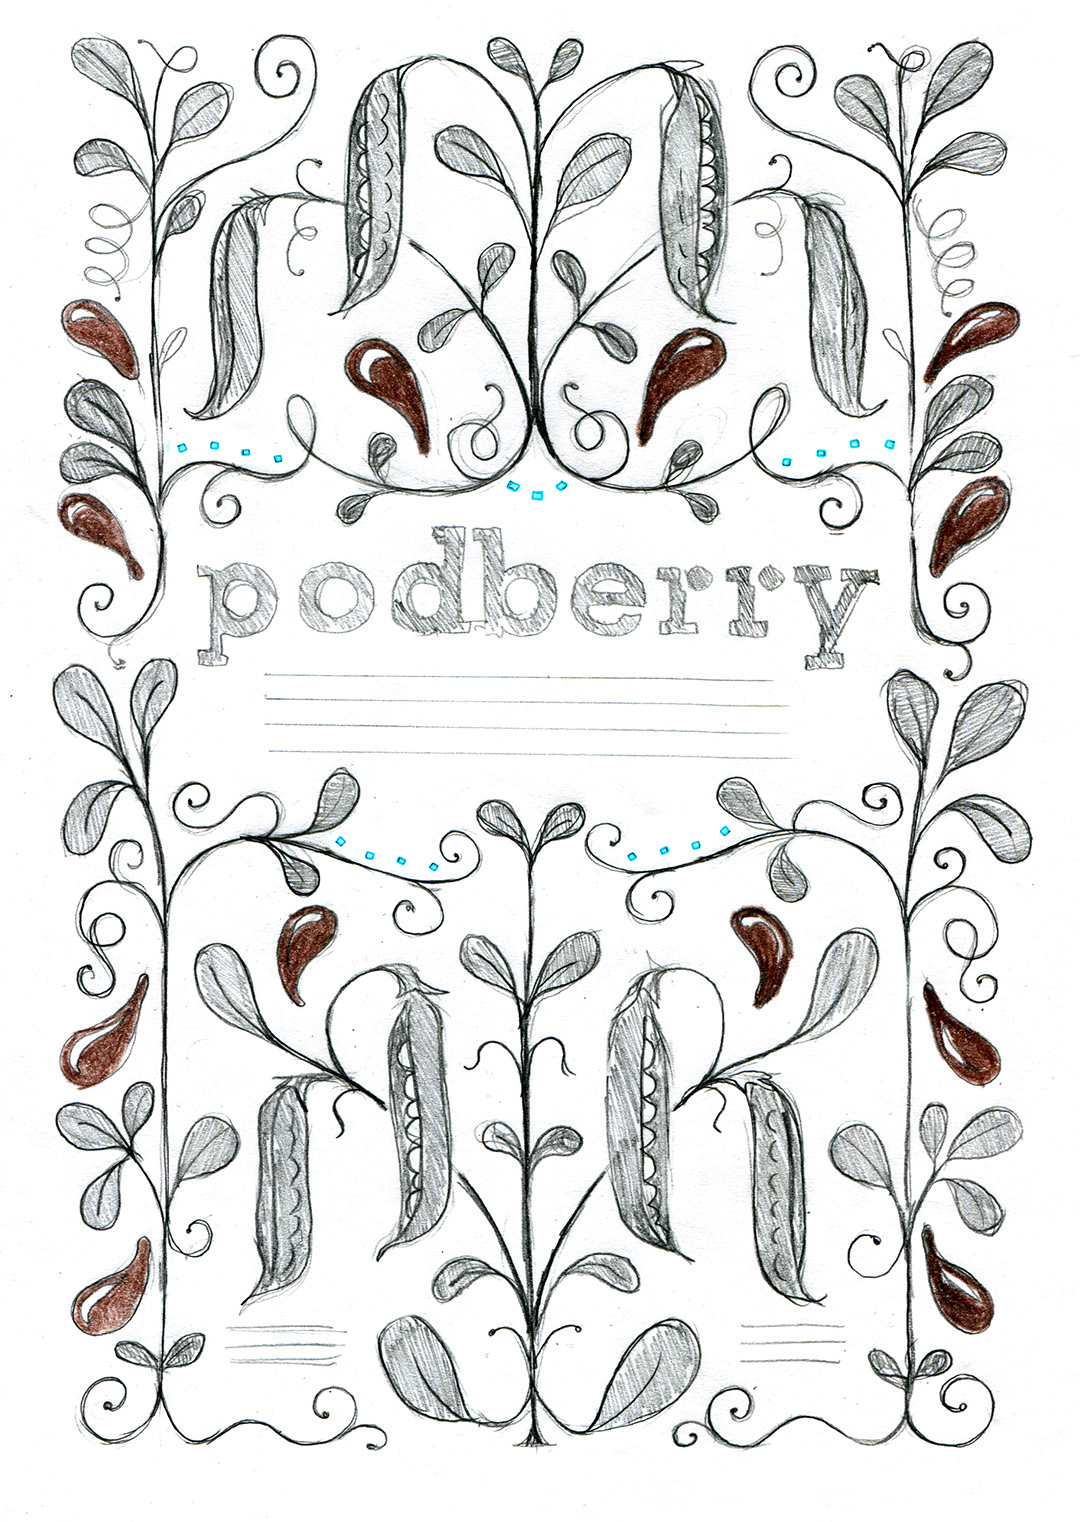 Podberry Pack Illustration Salt Sketch | Jamie Clarke Type